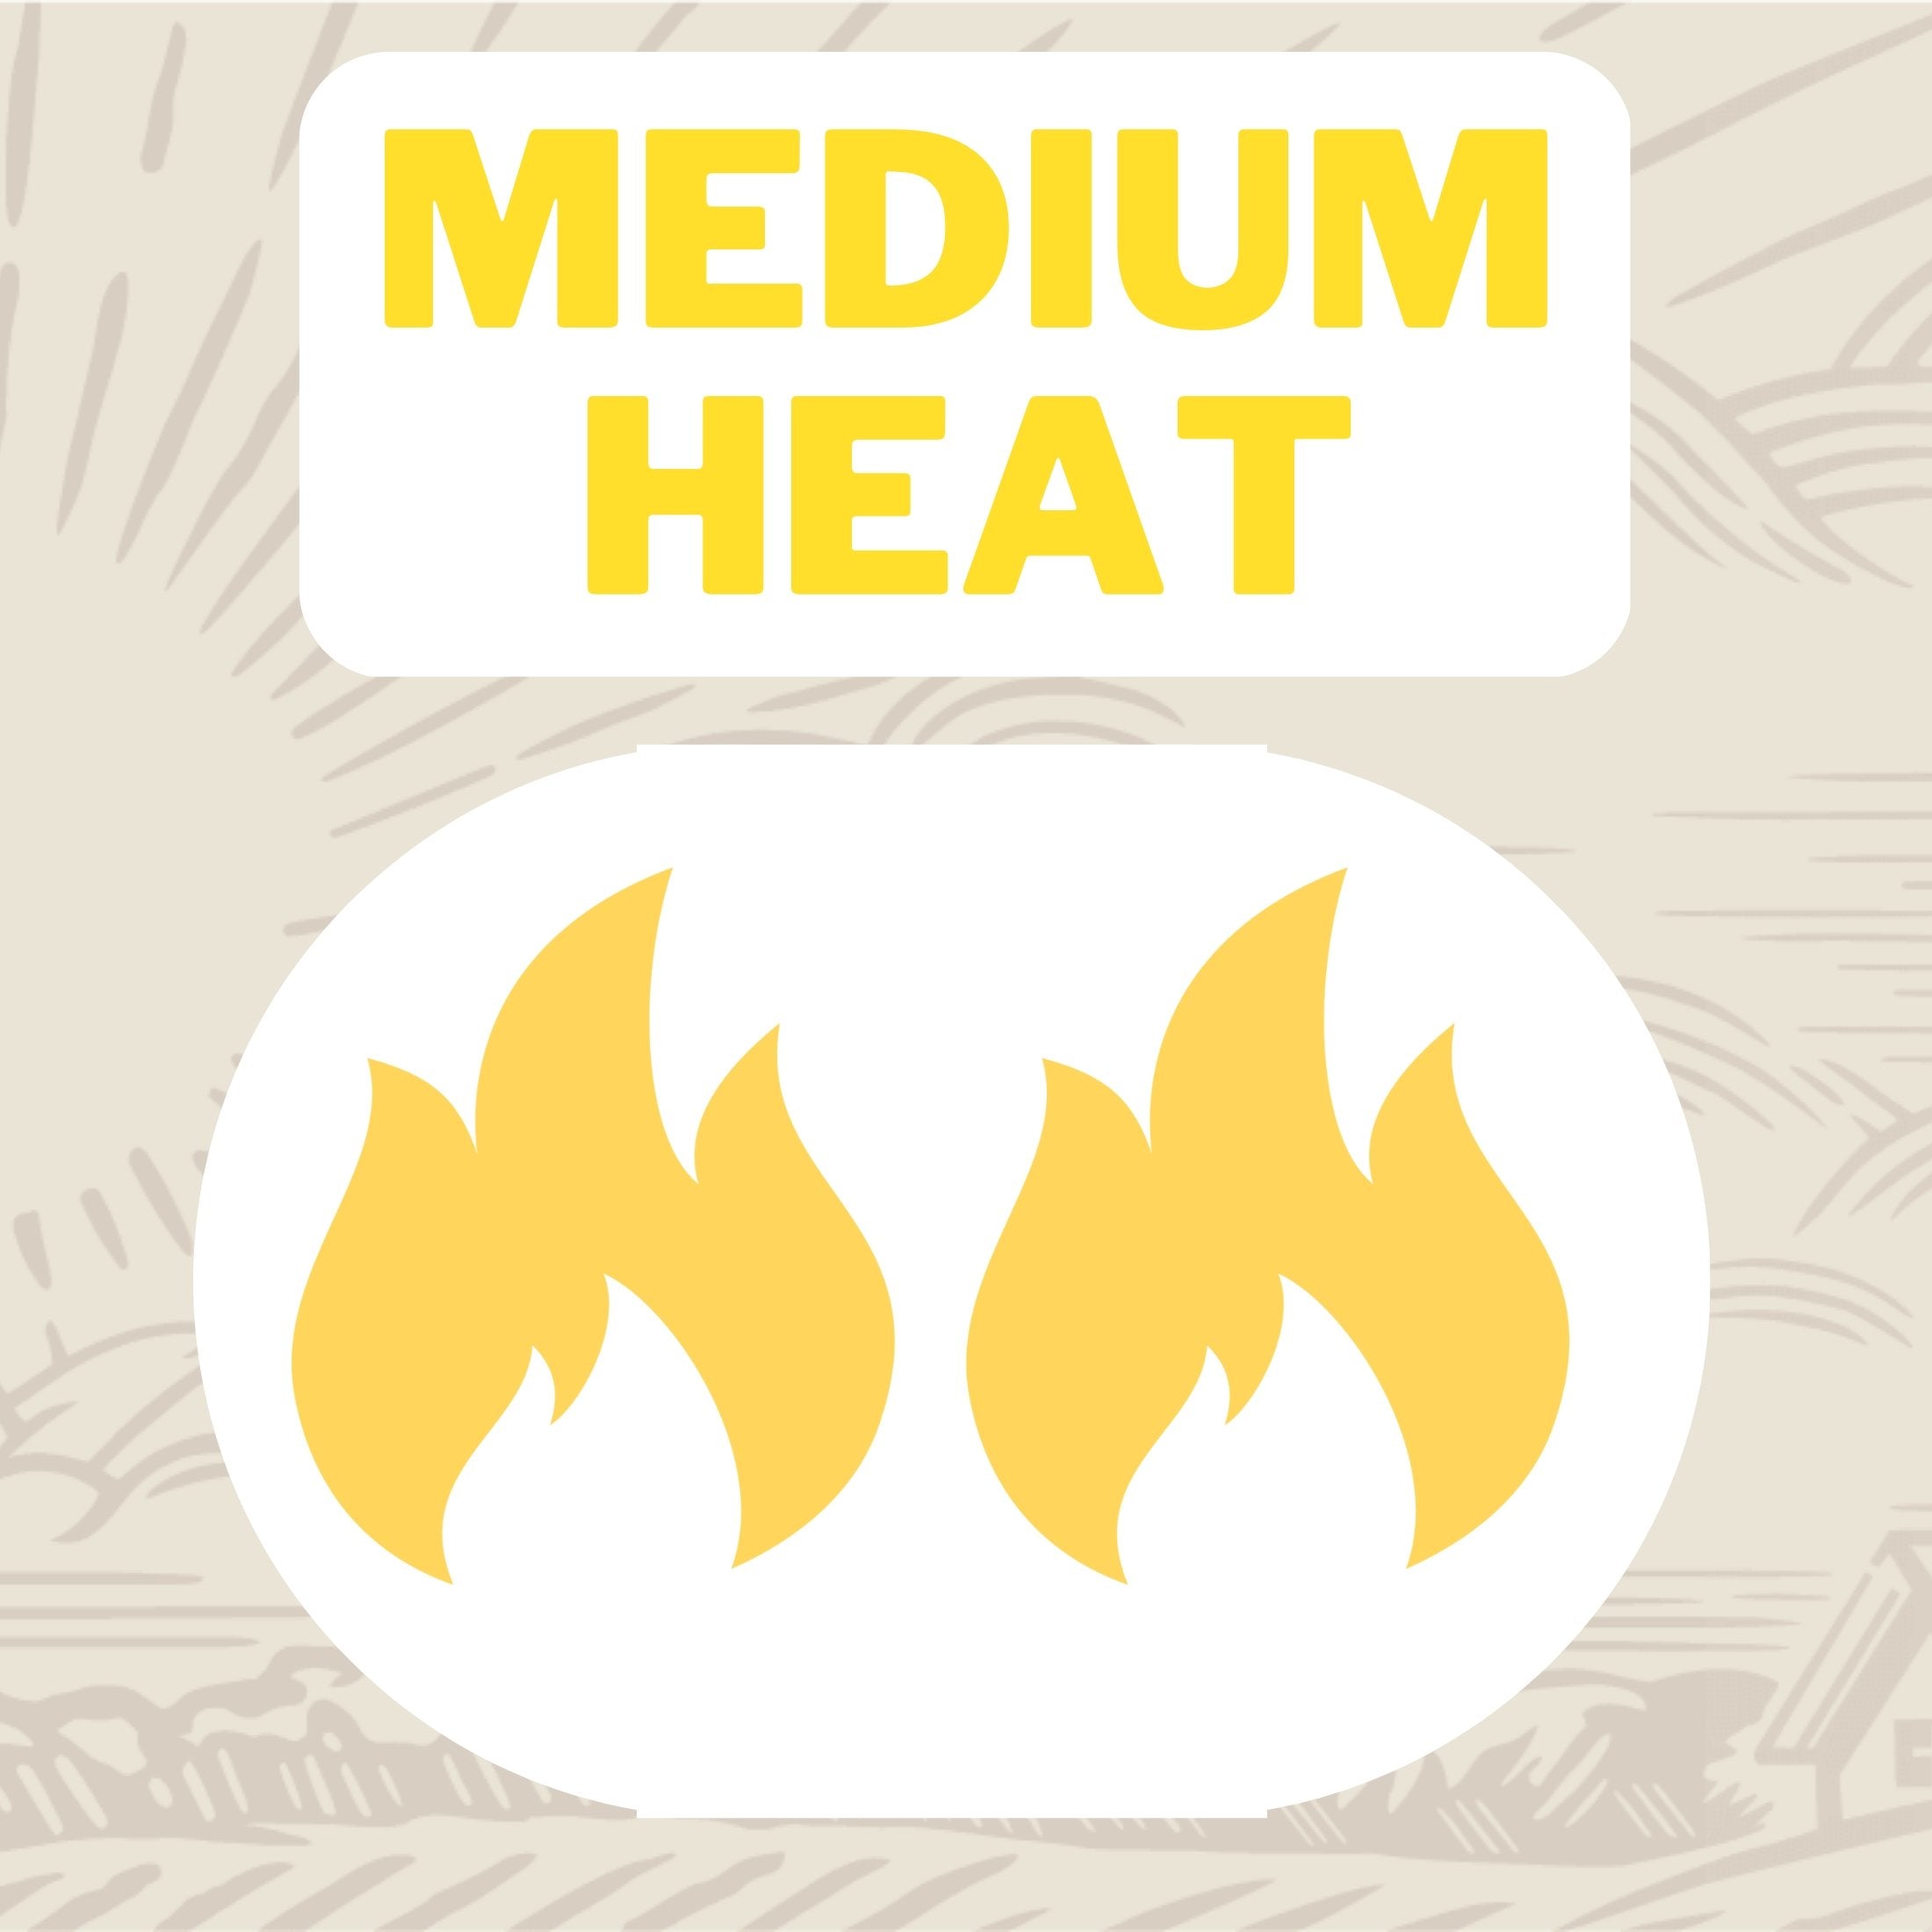 Heat Level: Medium Heat and Semi-Spicy